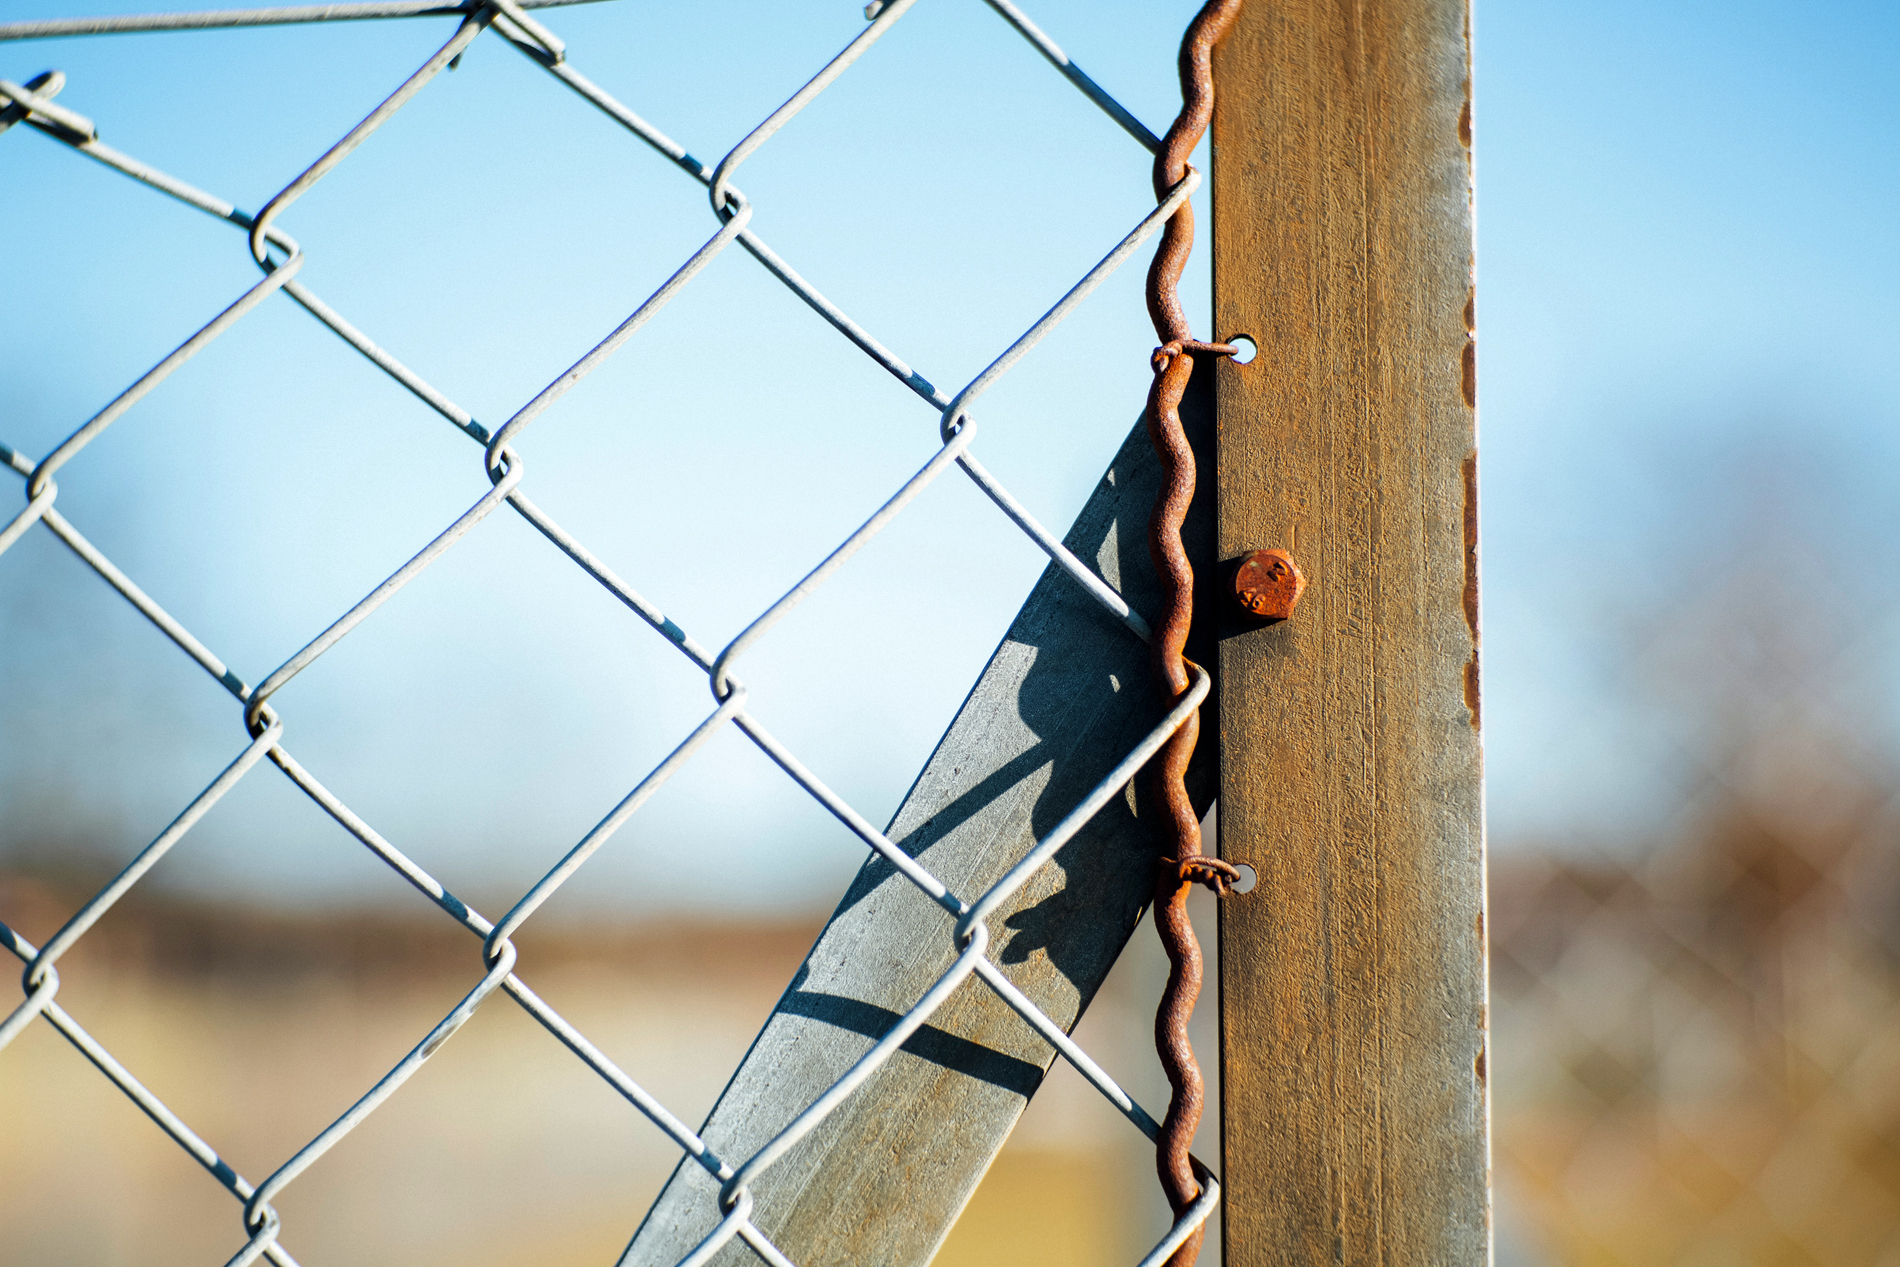 Chain link fencing. Photo by Markus Spiske, Unsplash.com